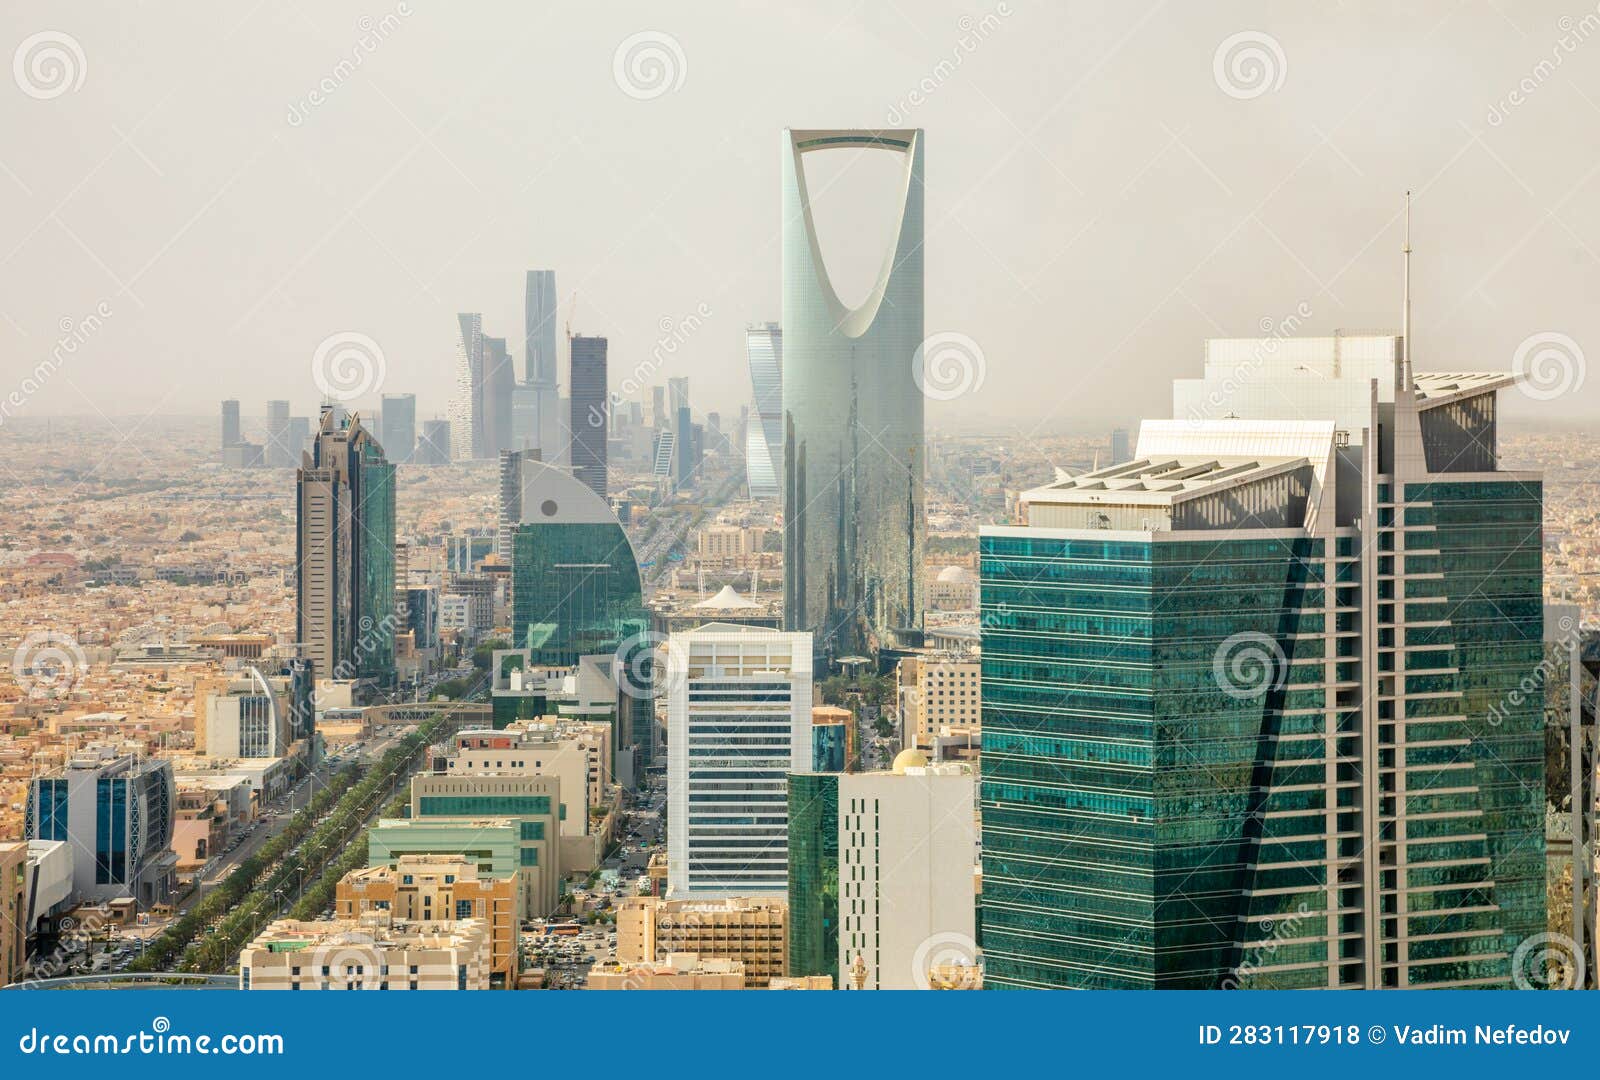 aerial panorama of downtown of riyadh city with skyscrapers of al olaya central business district, al riyadh, saudi arabia